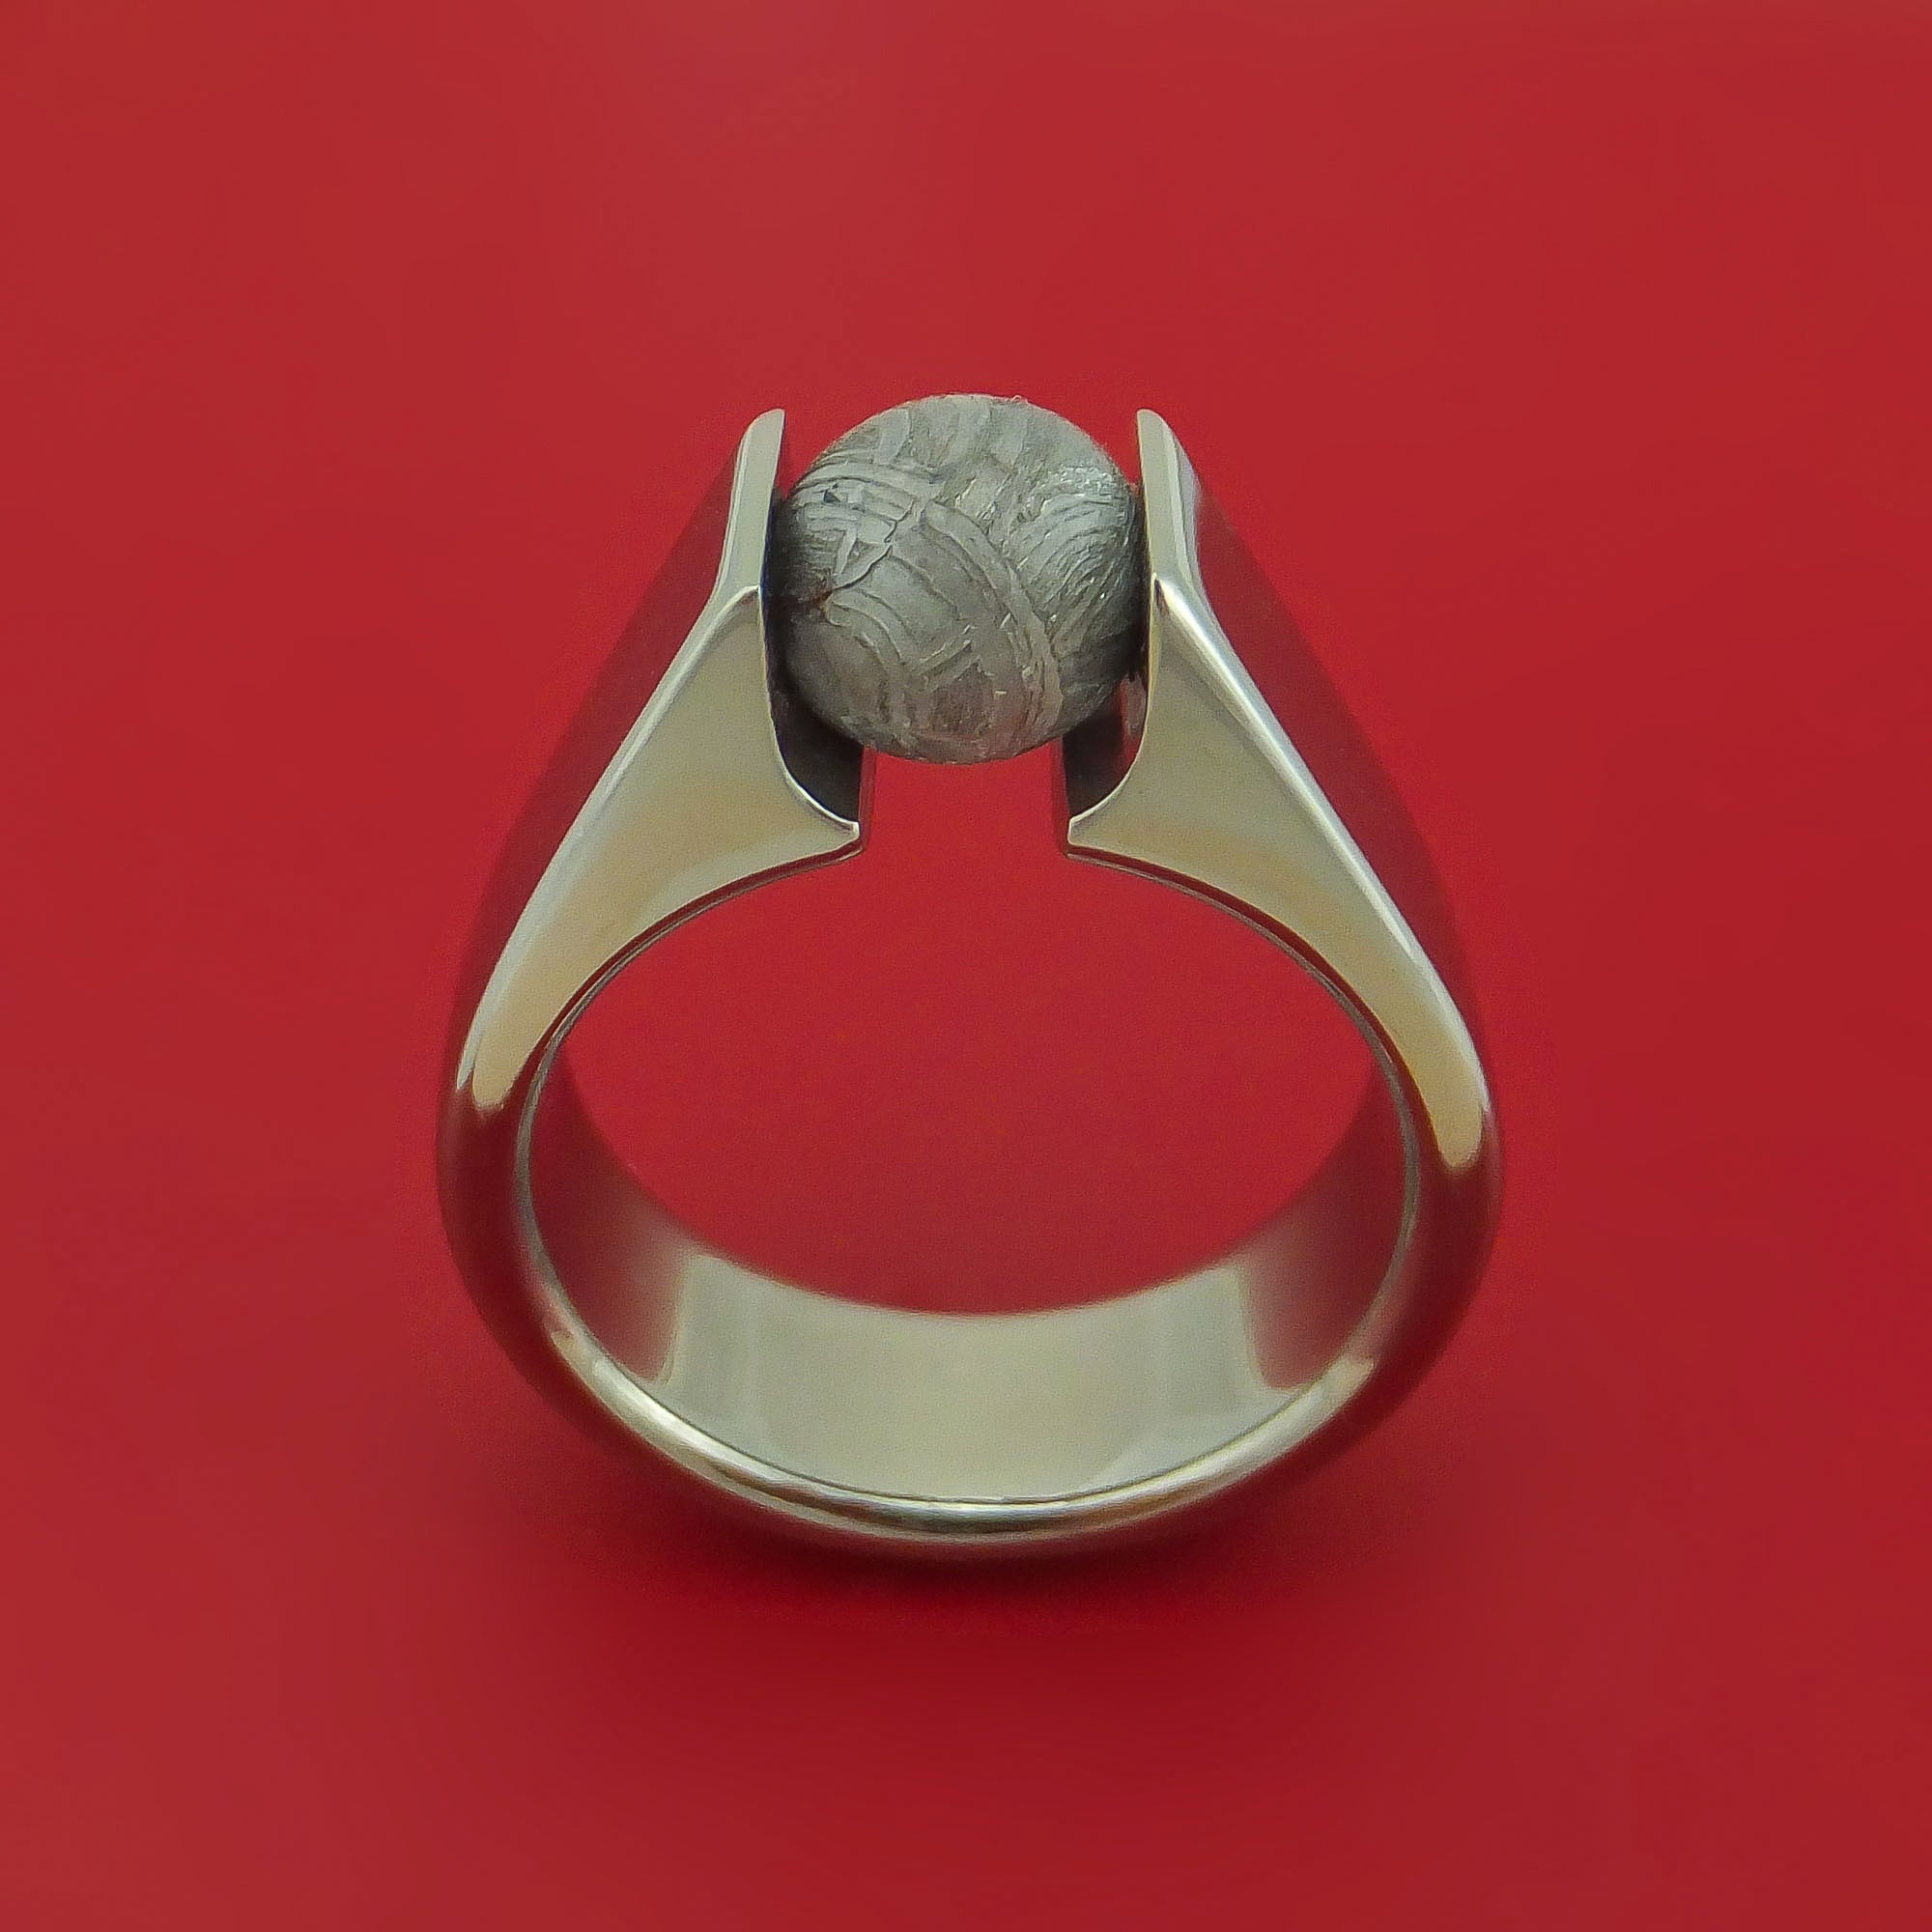 Tension Set Diamond Engagement Ring with Meteorite